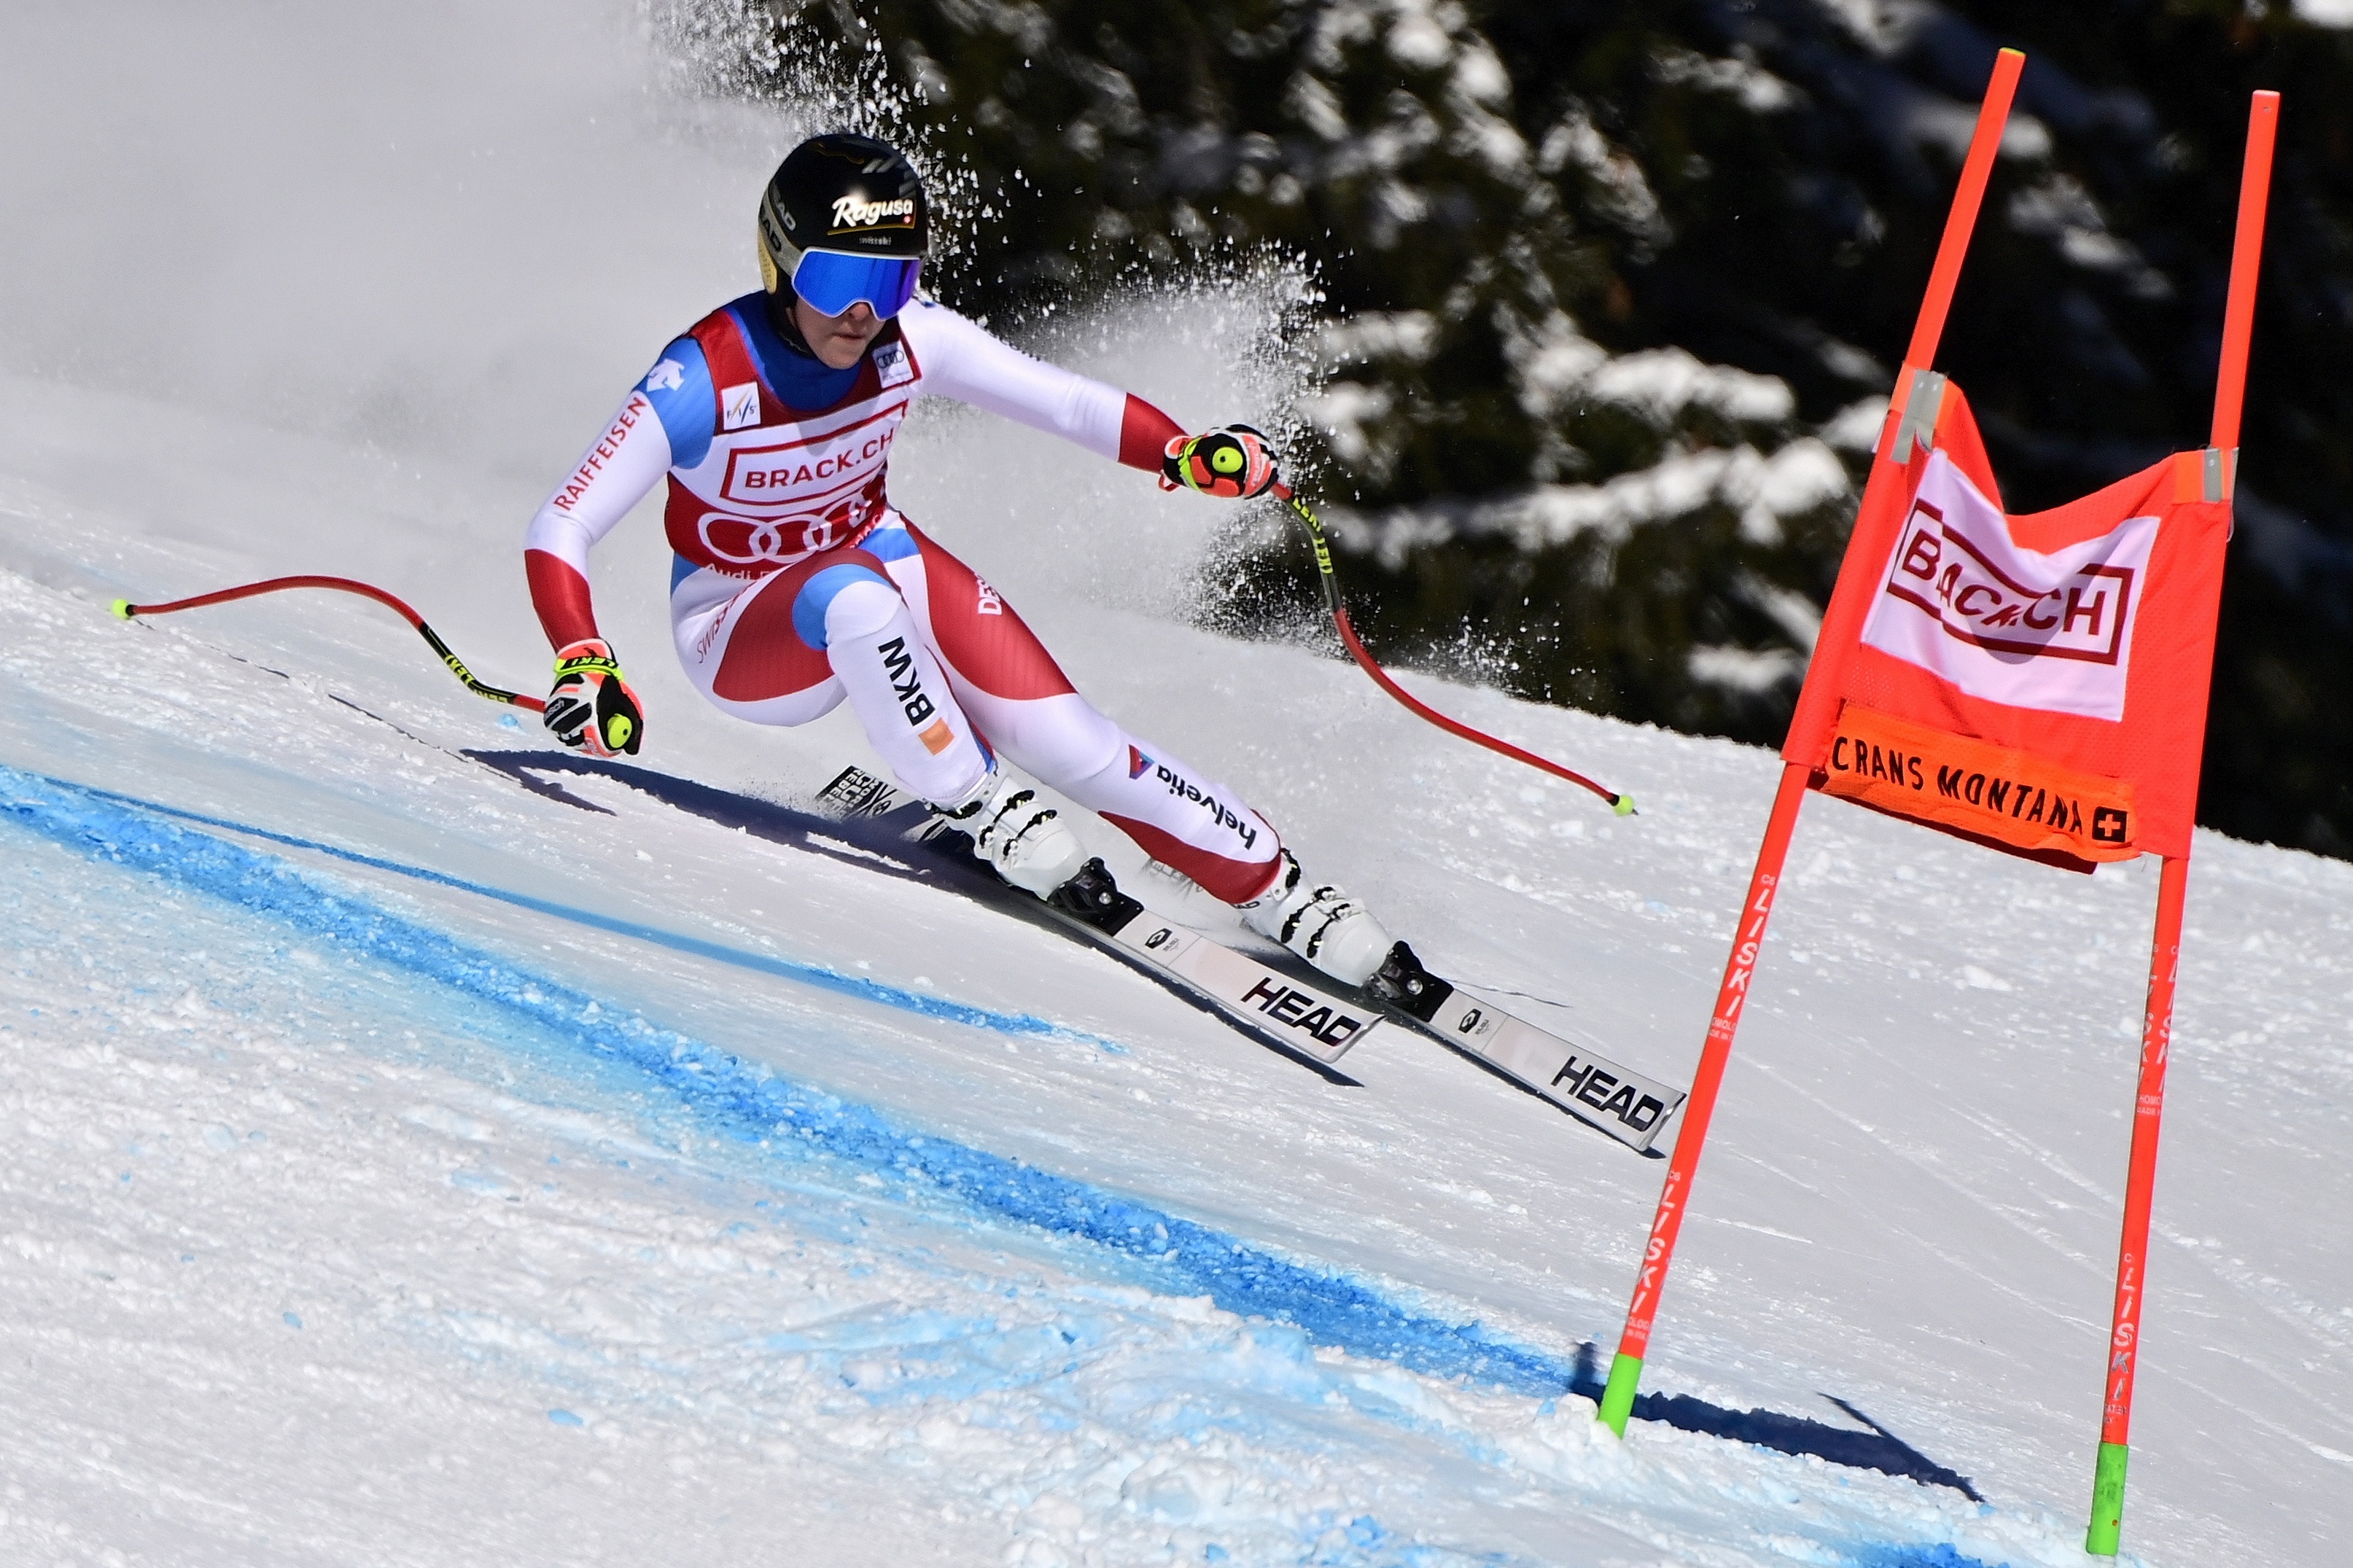 Swiss ski racer Lara Gut-Behrami competes at a World Cup race in Crans Montana, Switzerland. EFE/EPA/JEAN-CHRISTOPHE BOTT
